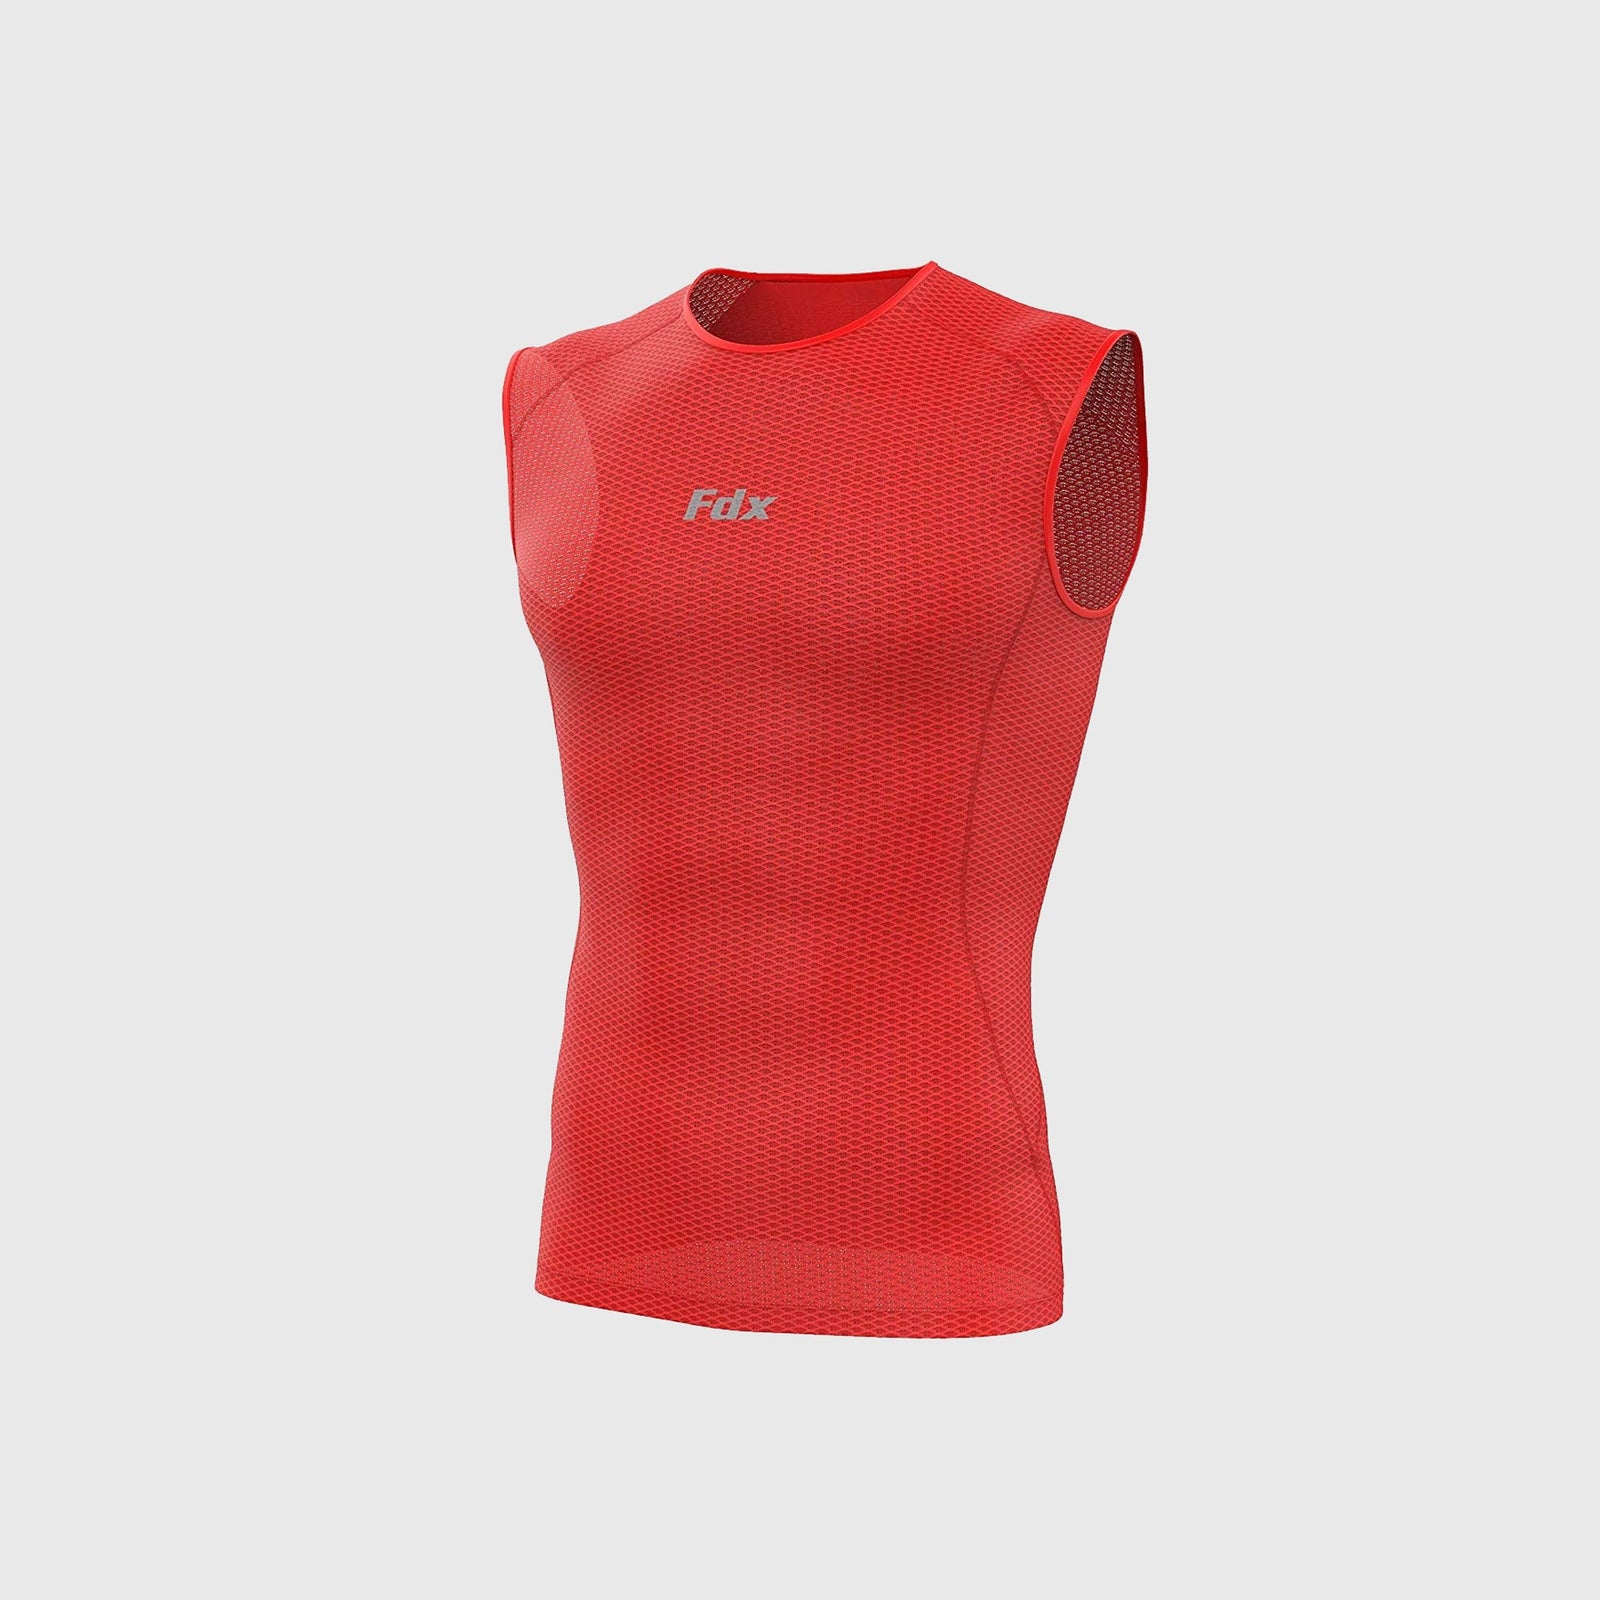 Fdx Cosmic Men's Short Sleeve Base Layer Gym Shirt Red